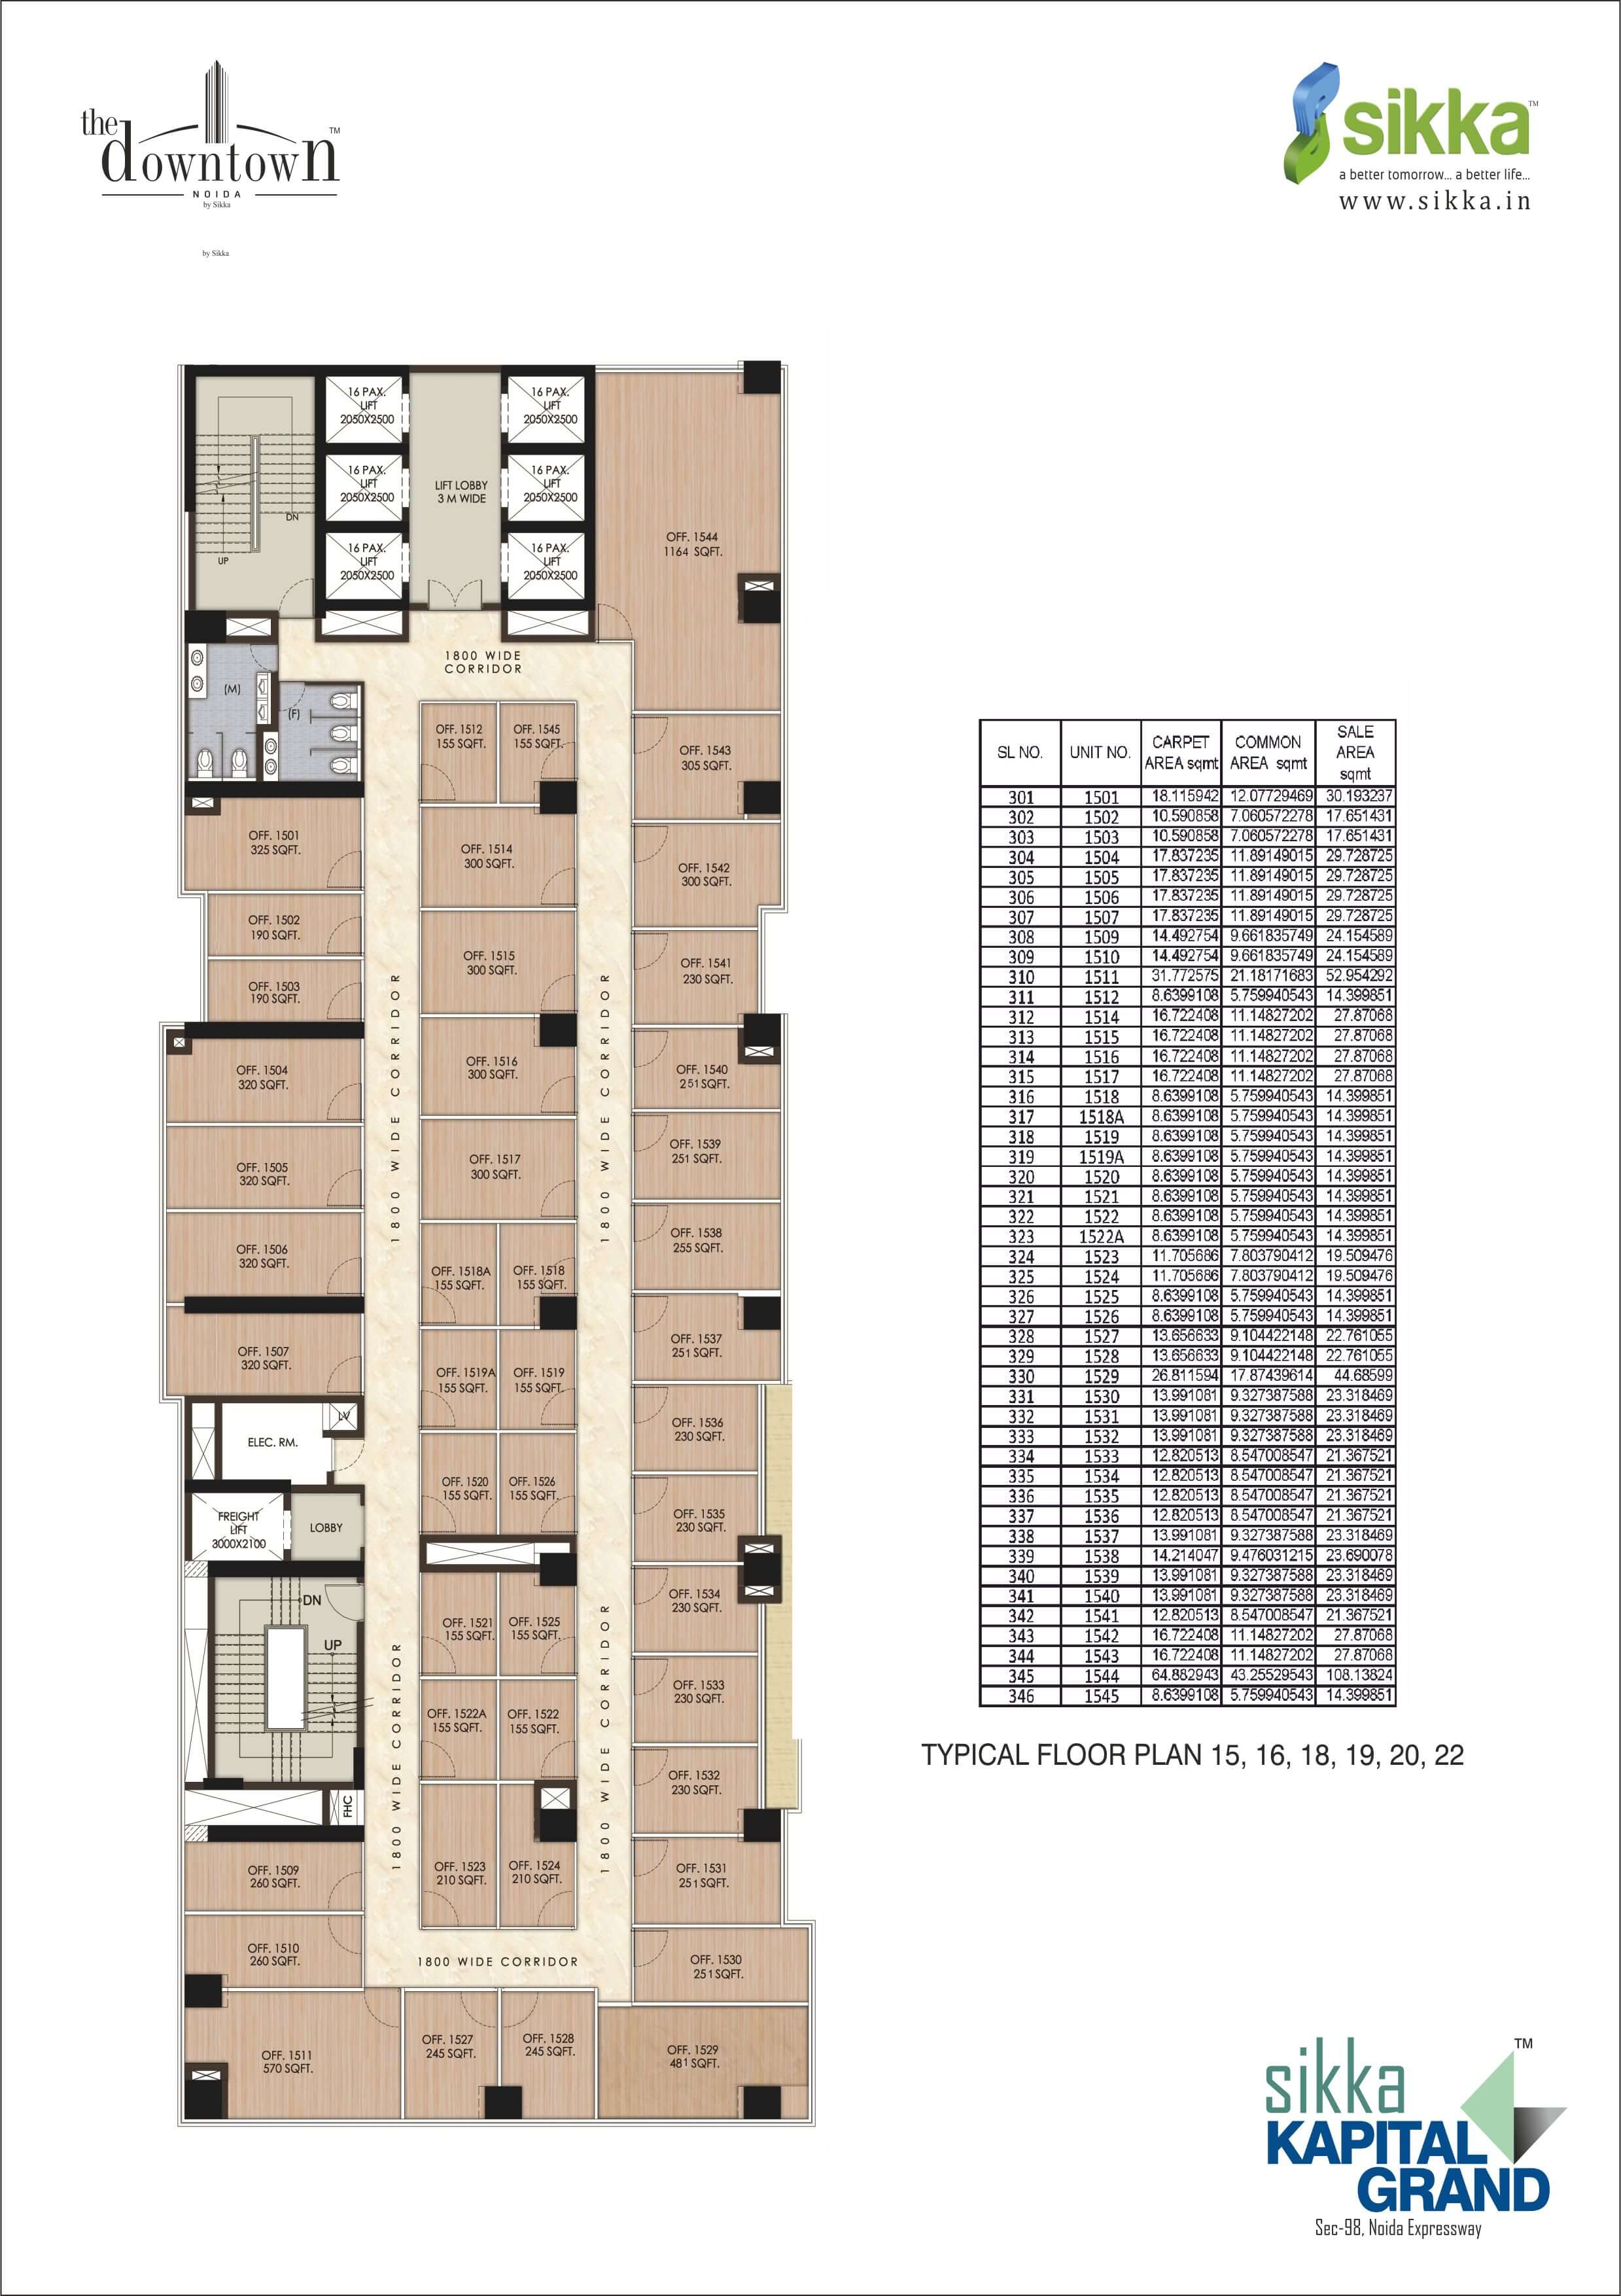 Kapital Grand Typical Floor Plan - 15, 16. 18, 19, 20, 22